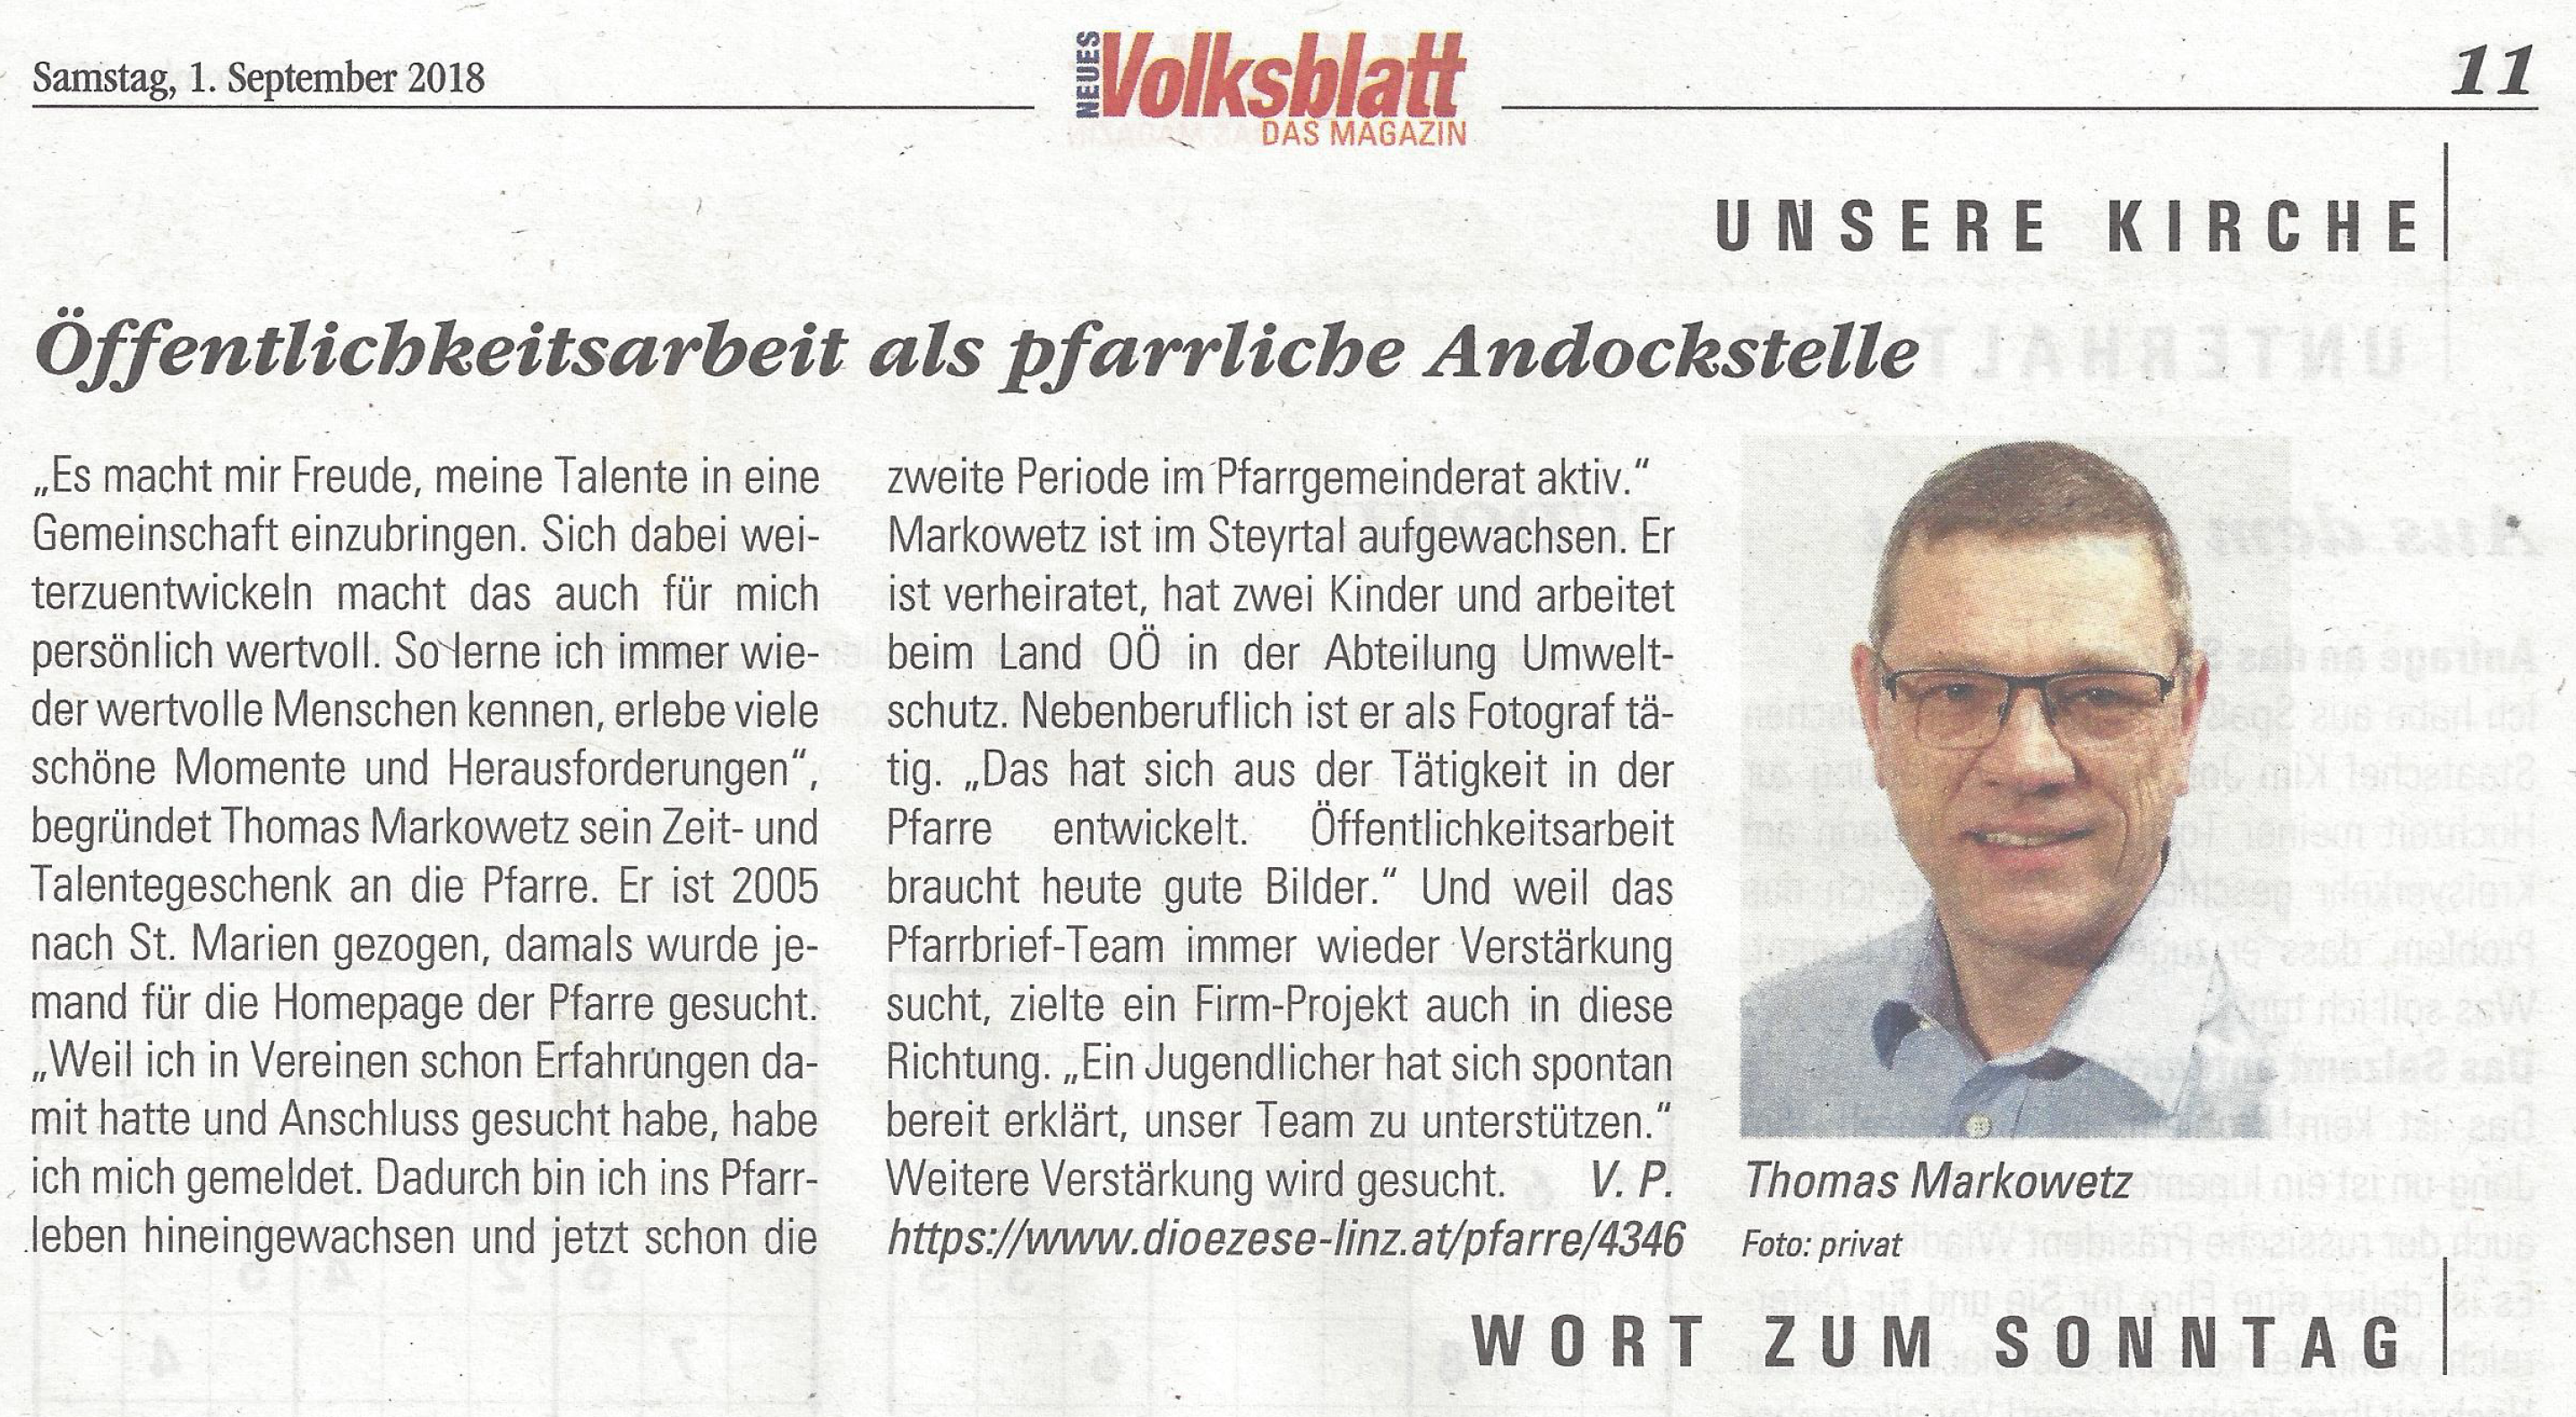 Interview im Volksblatt am 1.9.2018